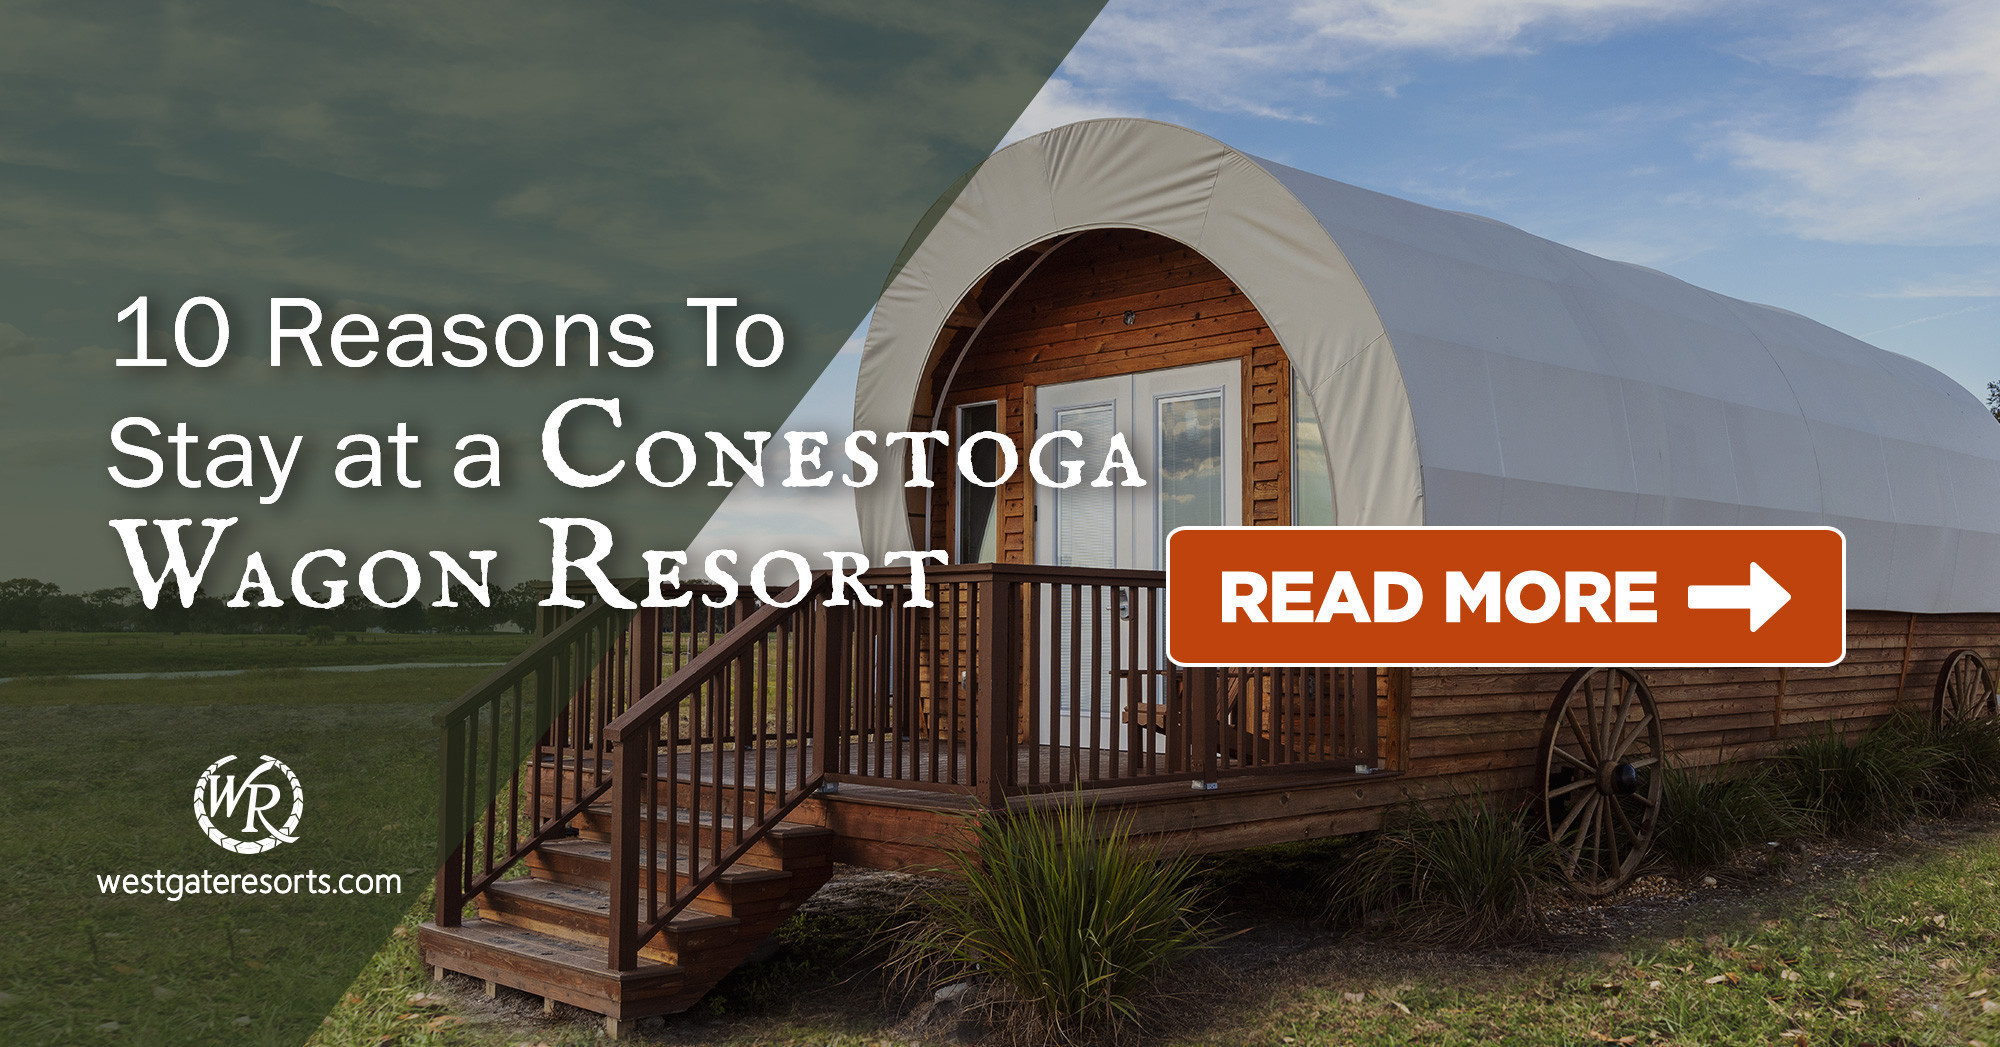 10 Reasons To Stay at a Conestoga Wagon Resort